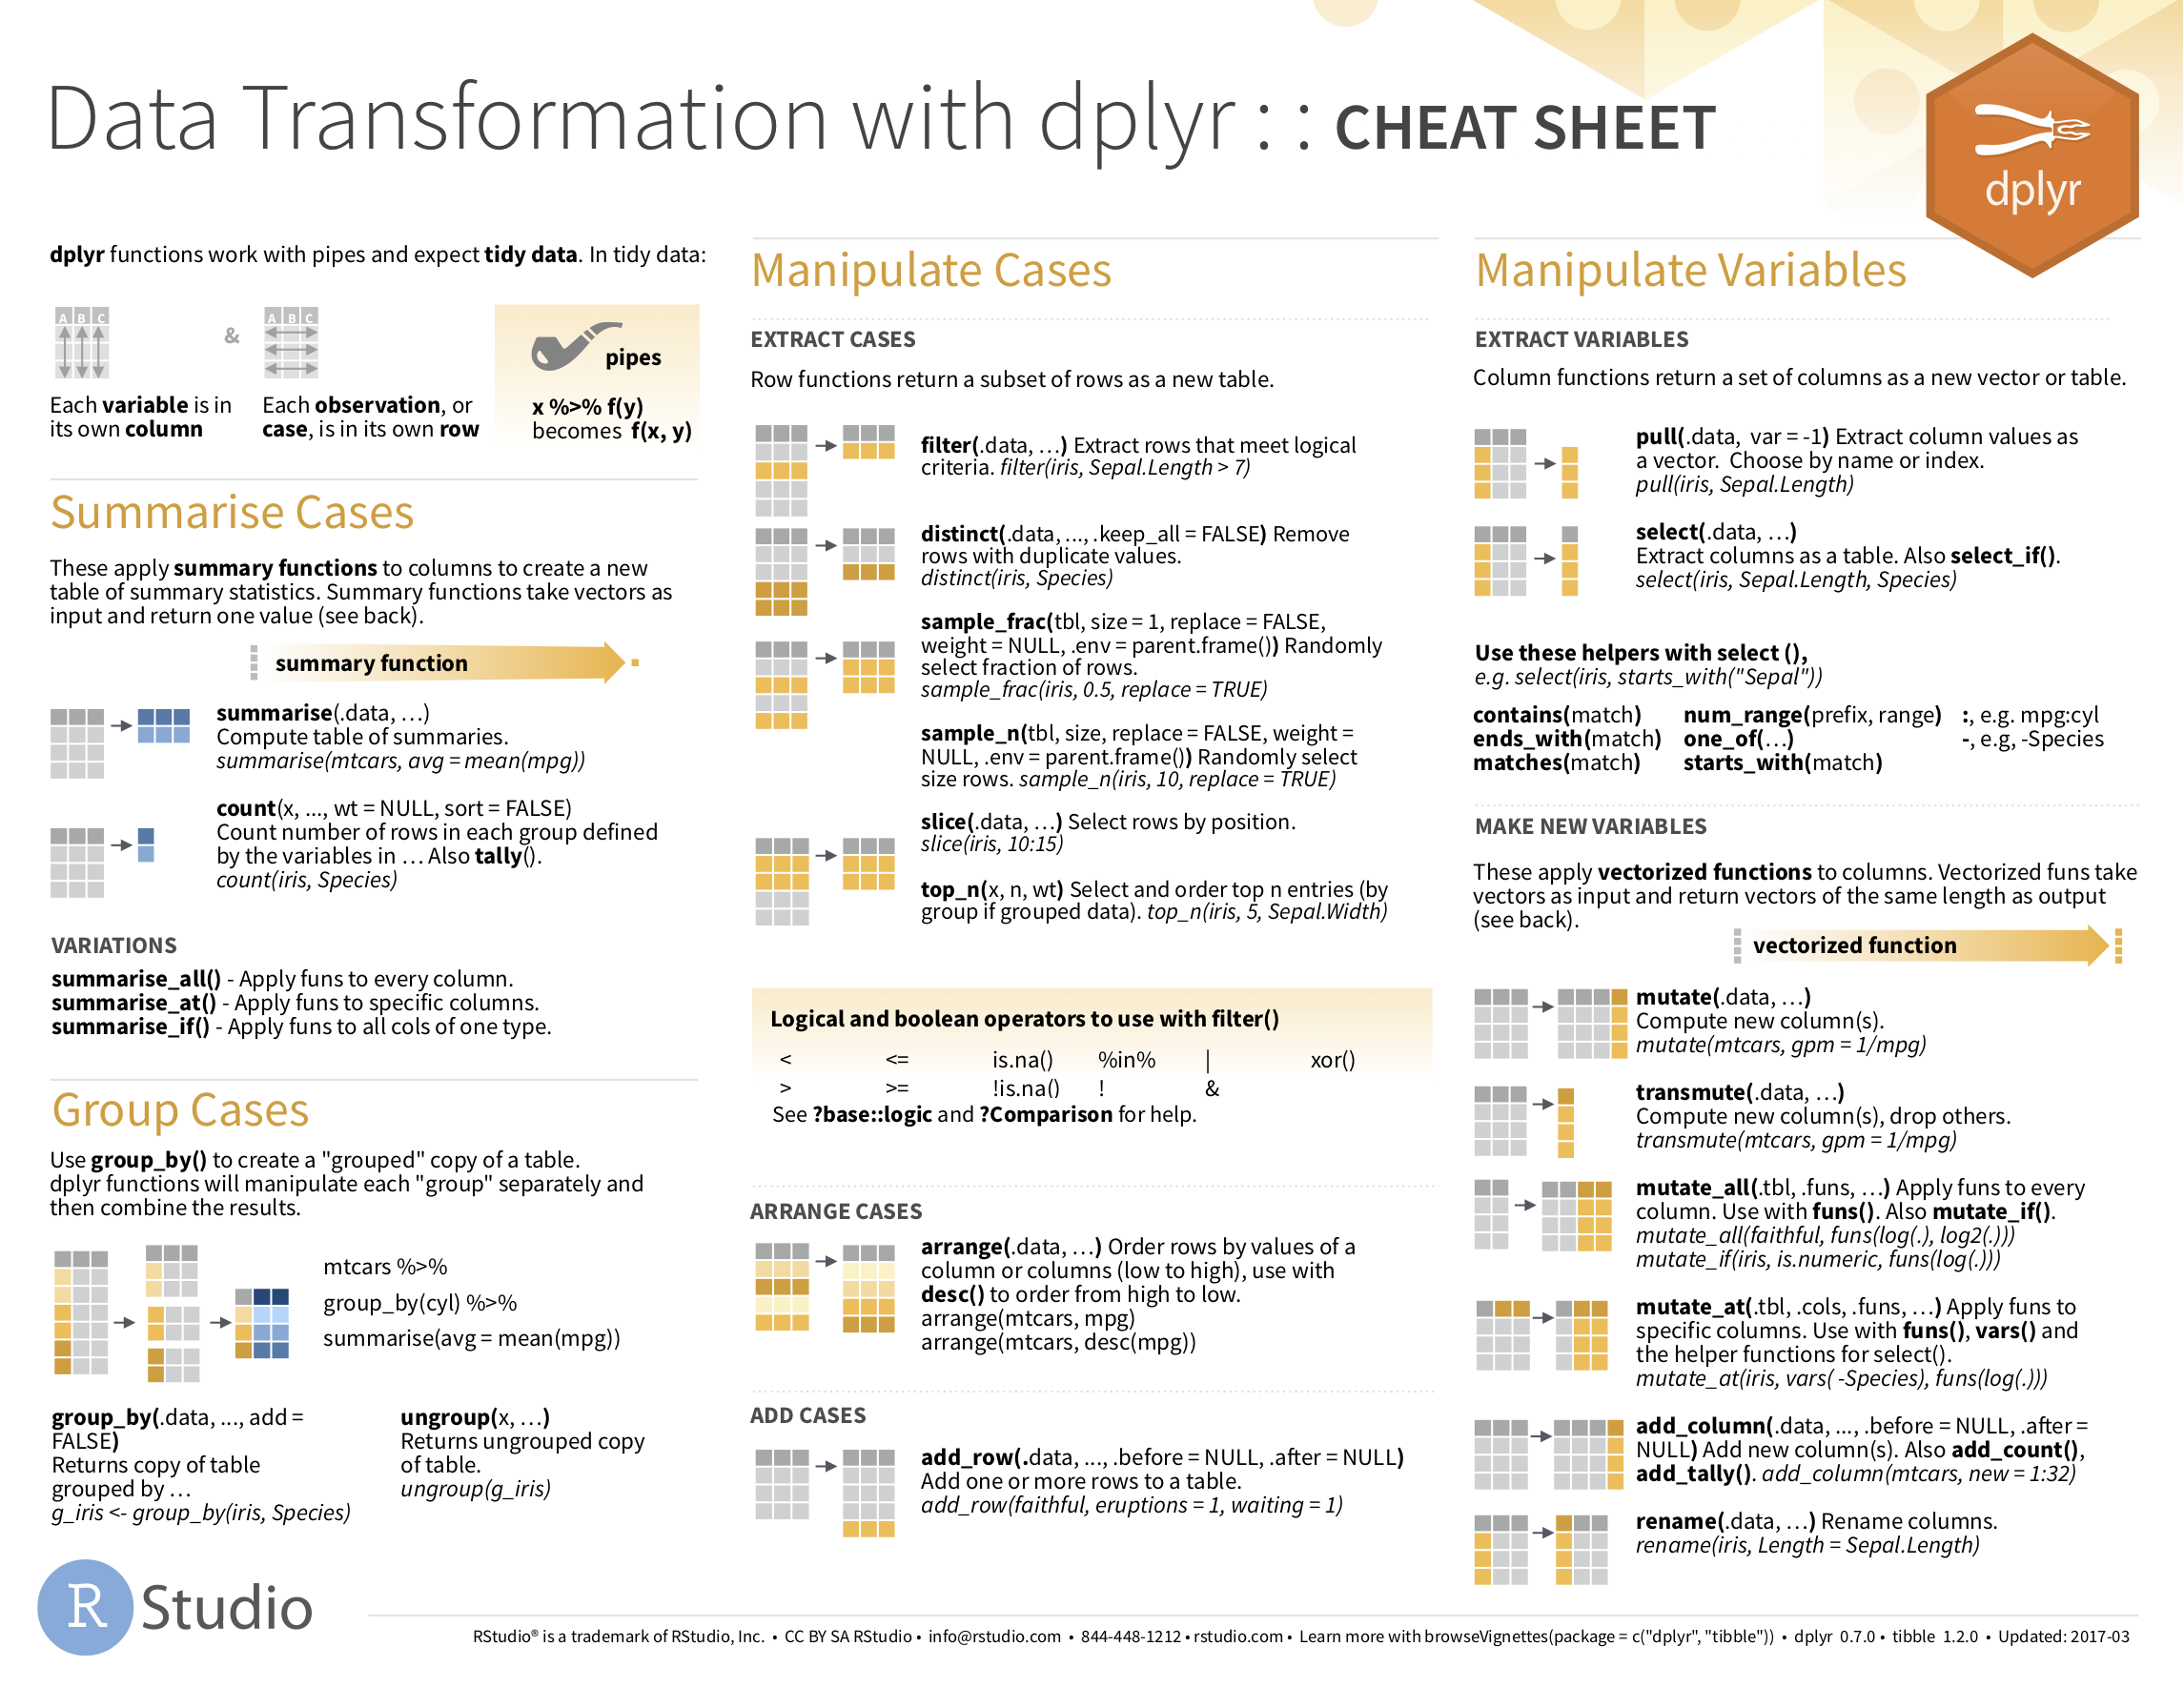 Data Transformation with dplyr cheatsheet.